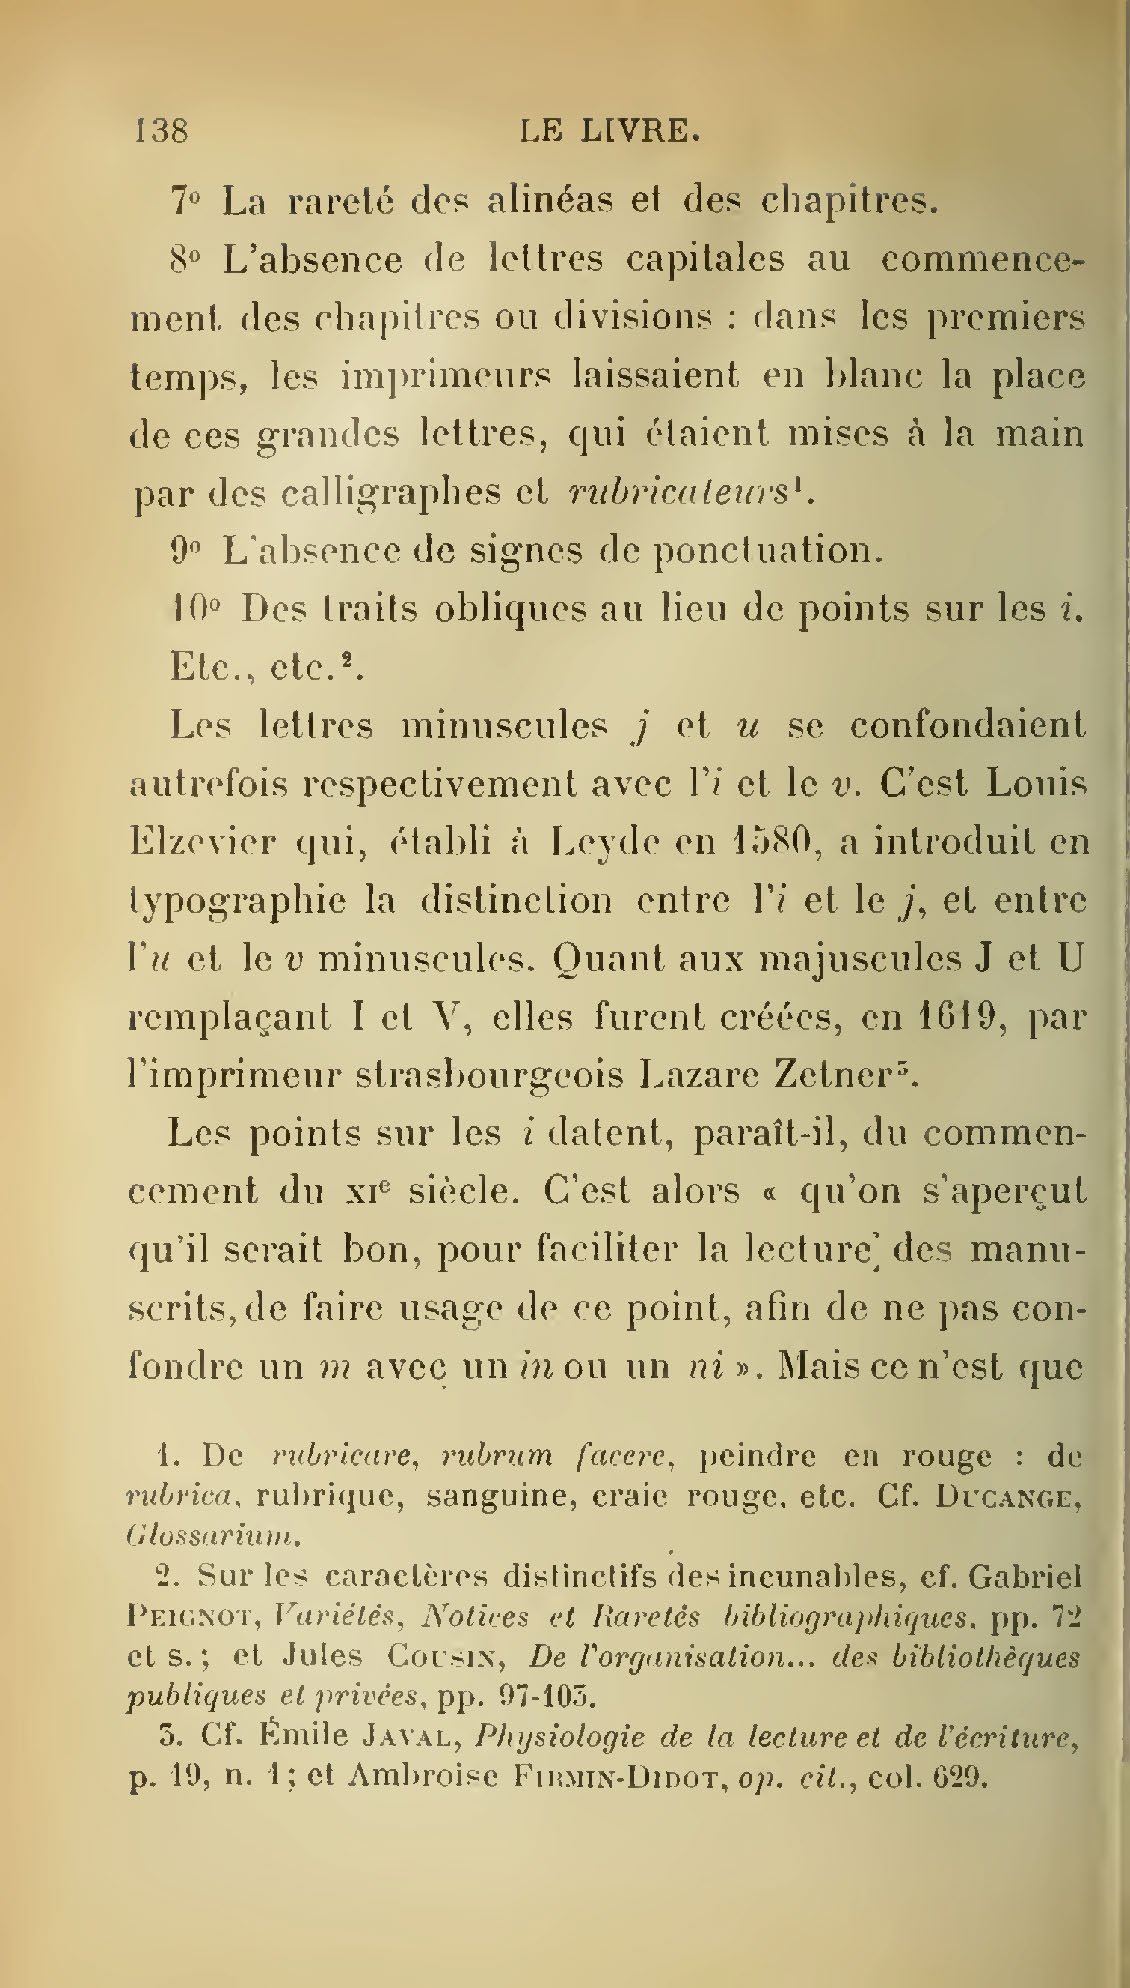 Albert Cim, Le Livre, t. III, p. 138.